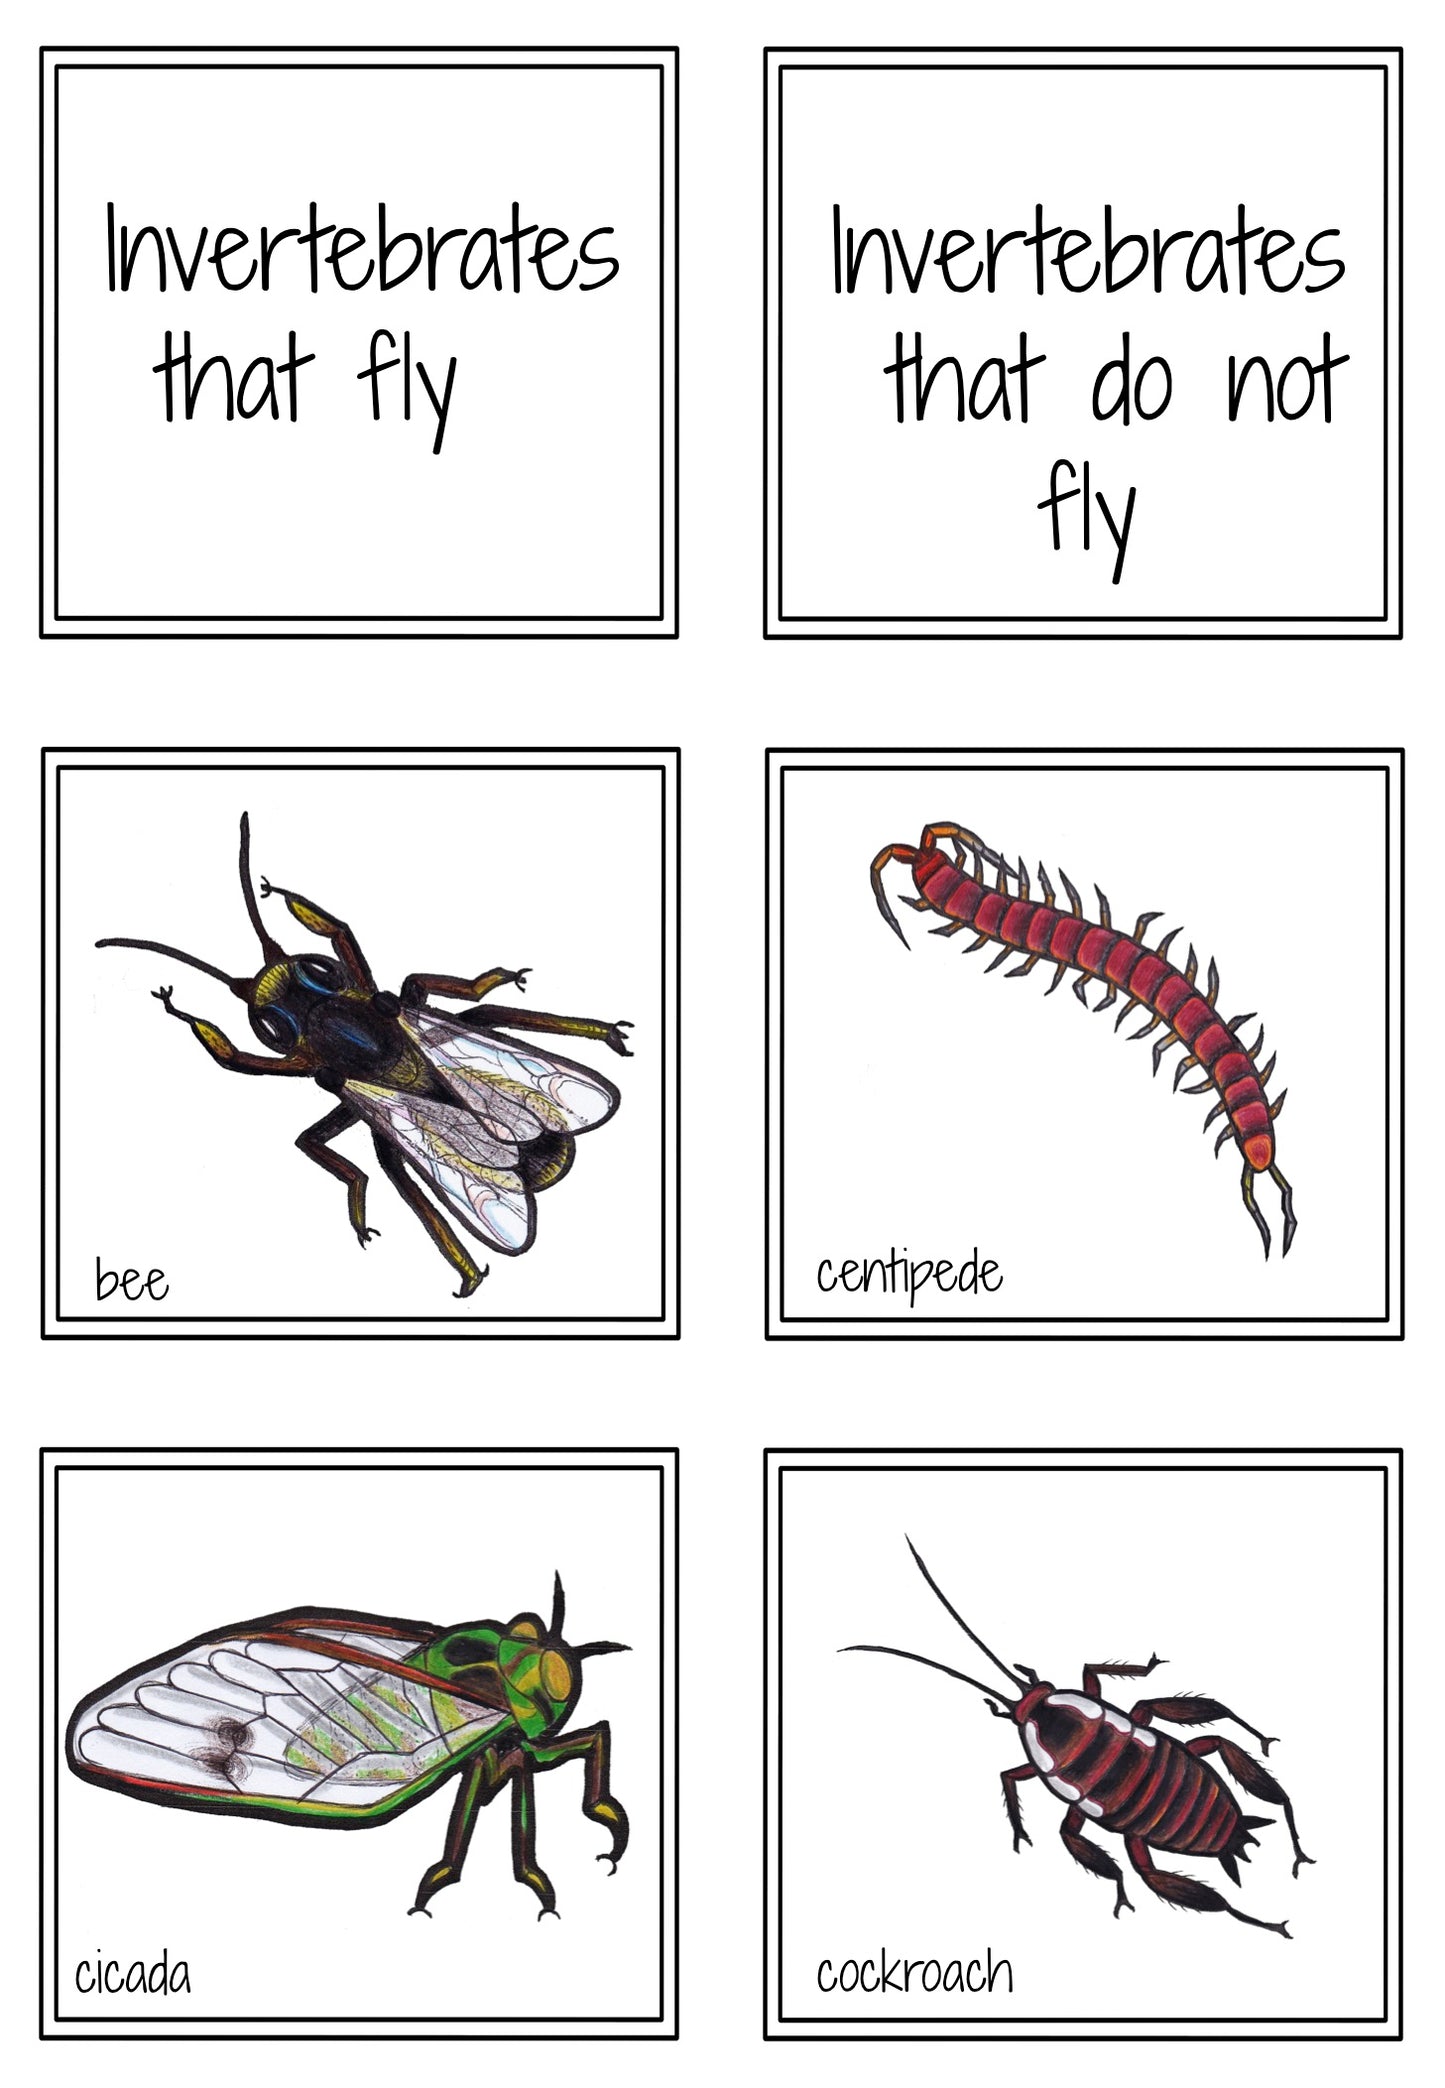 New Zealand Invertebrates - flies or crawls - montessorikiwi